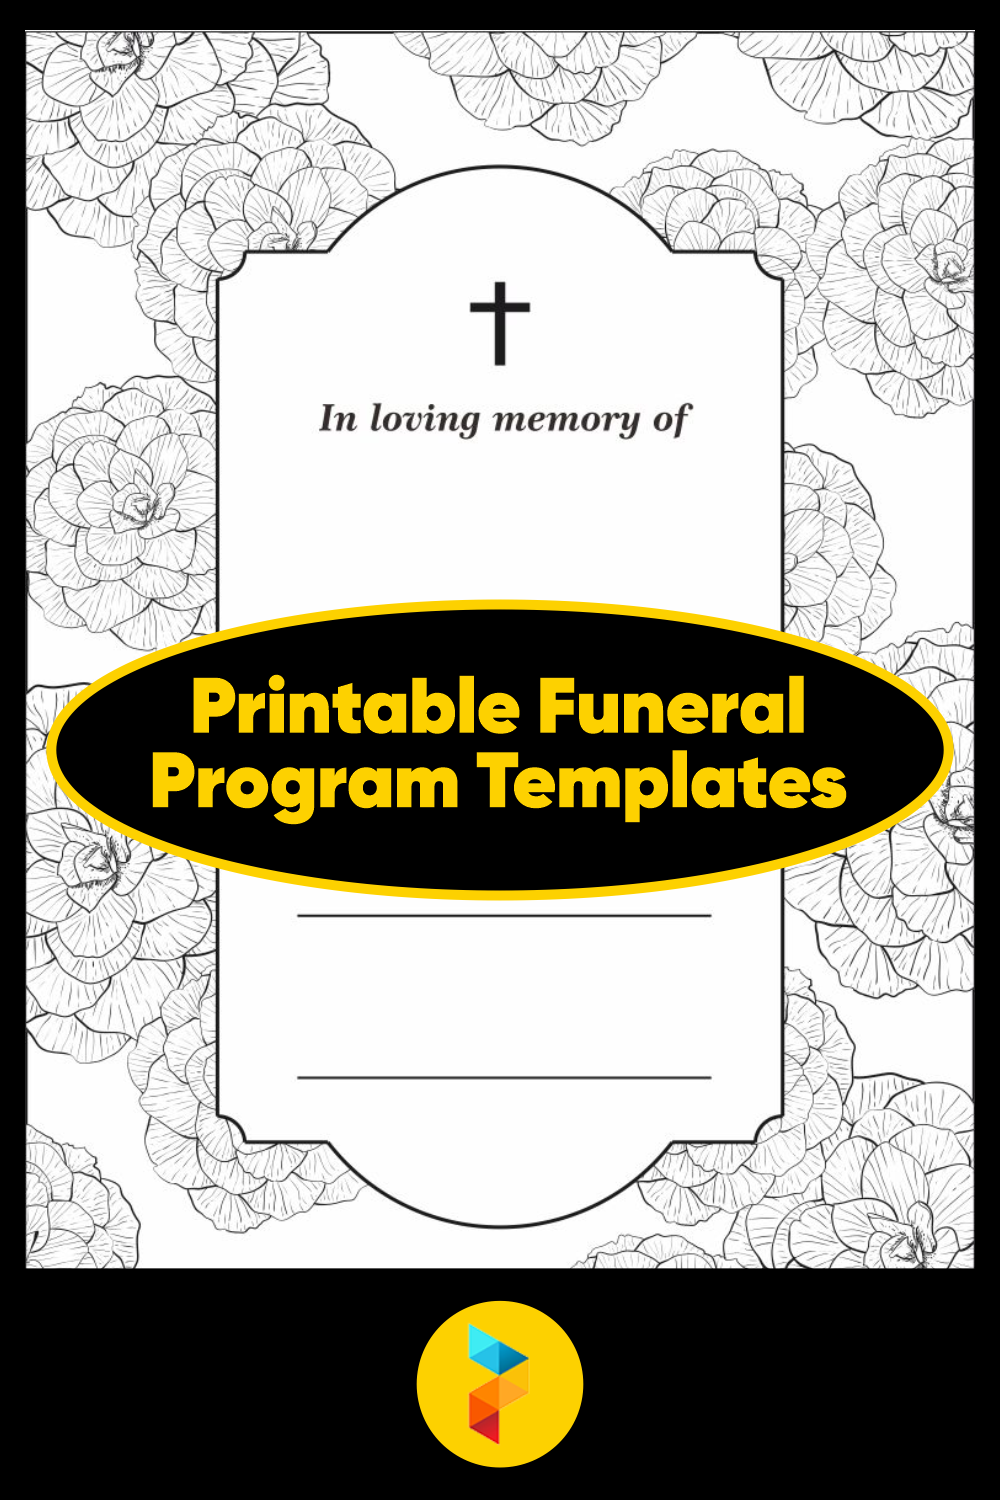 Printable Funeral Program Templates